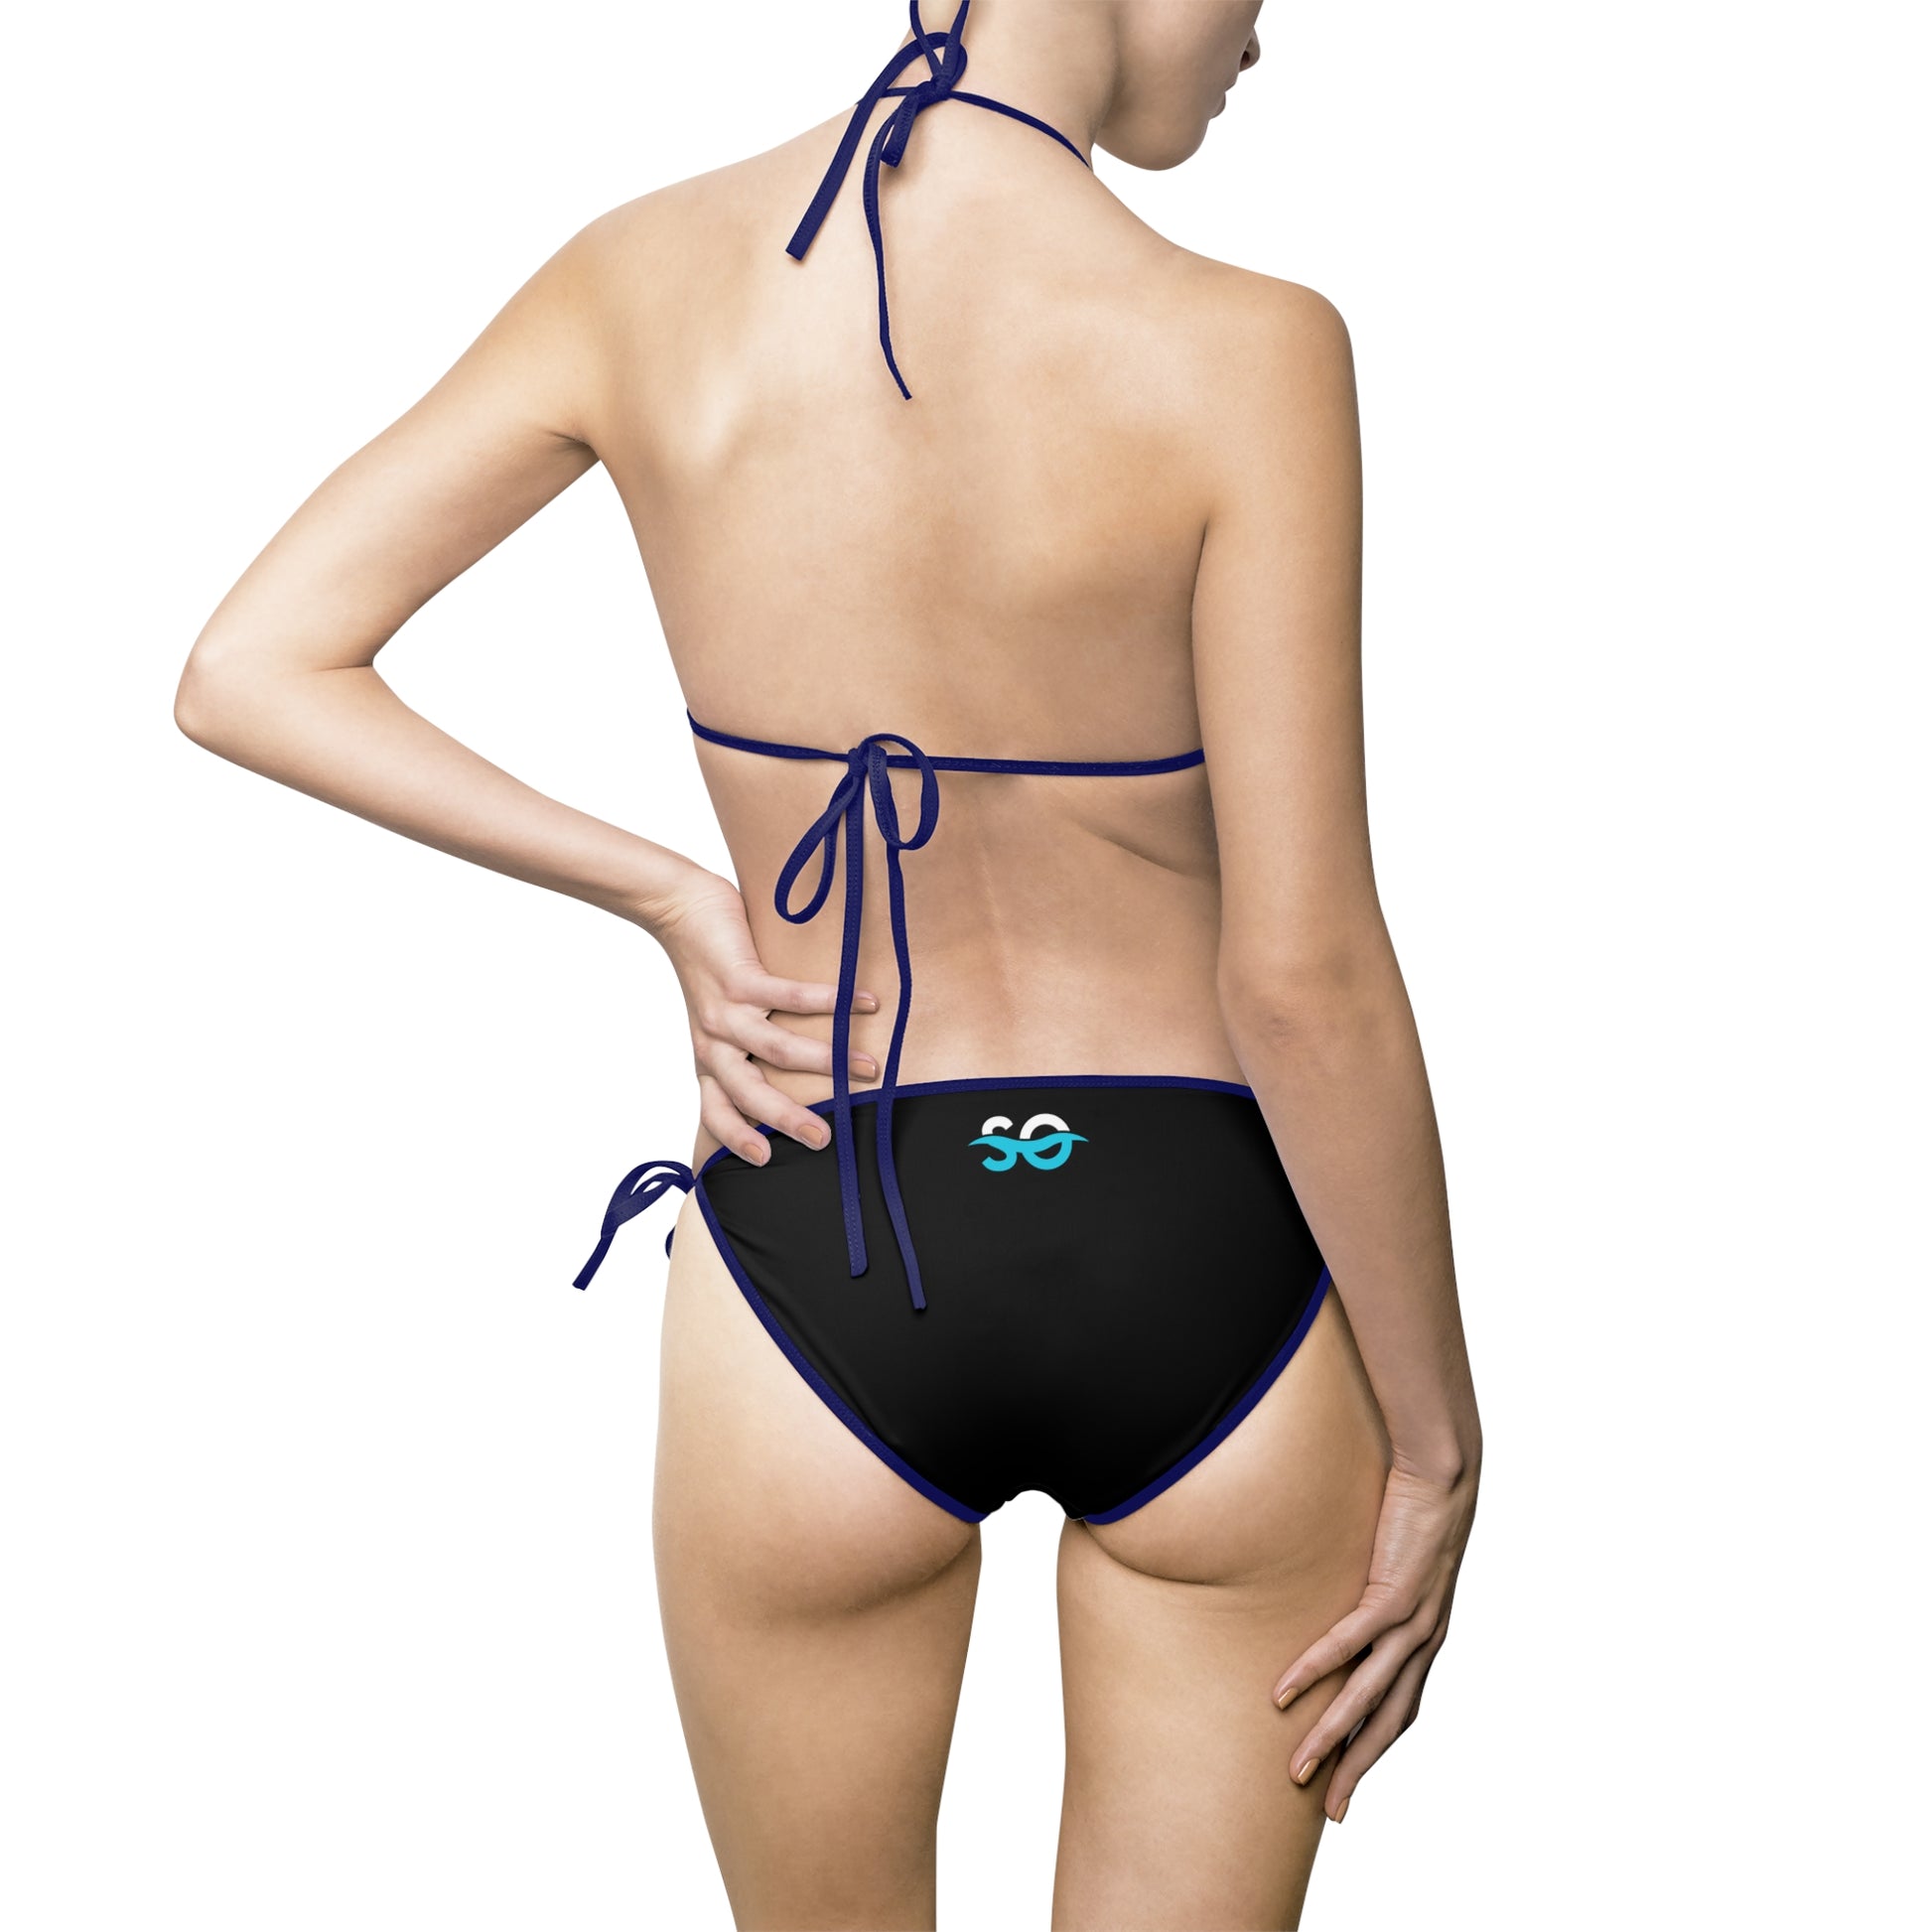 a woman in a black and blue bikini bottom